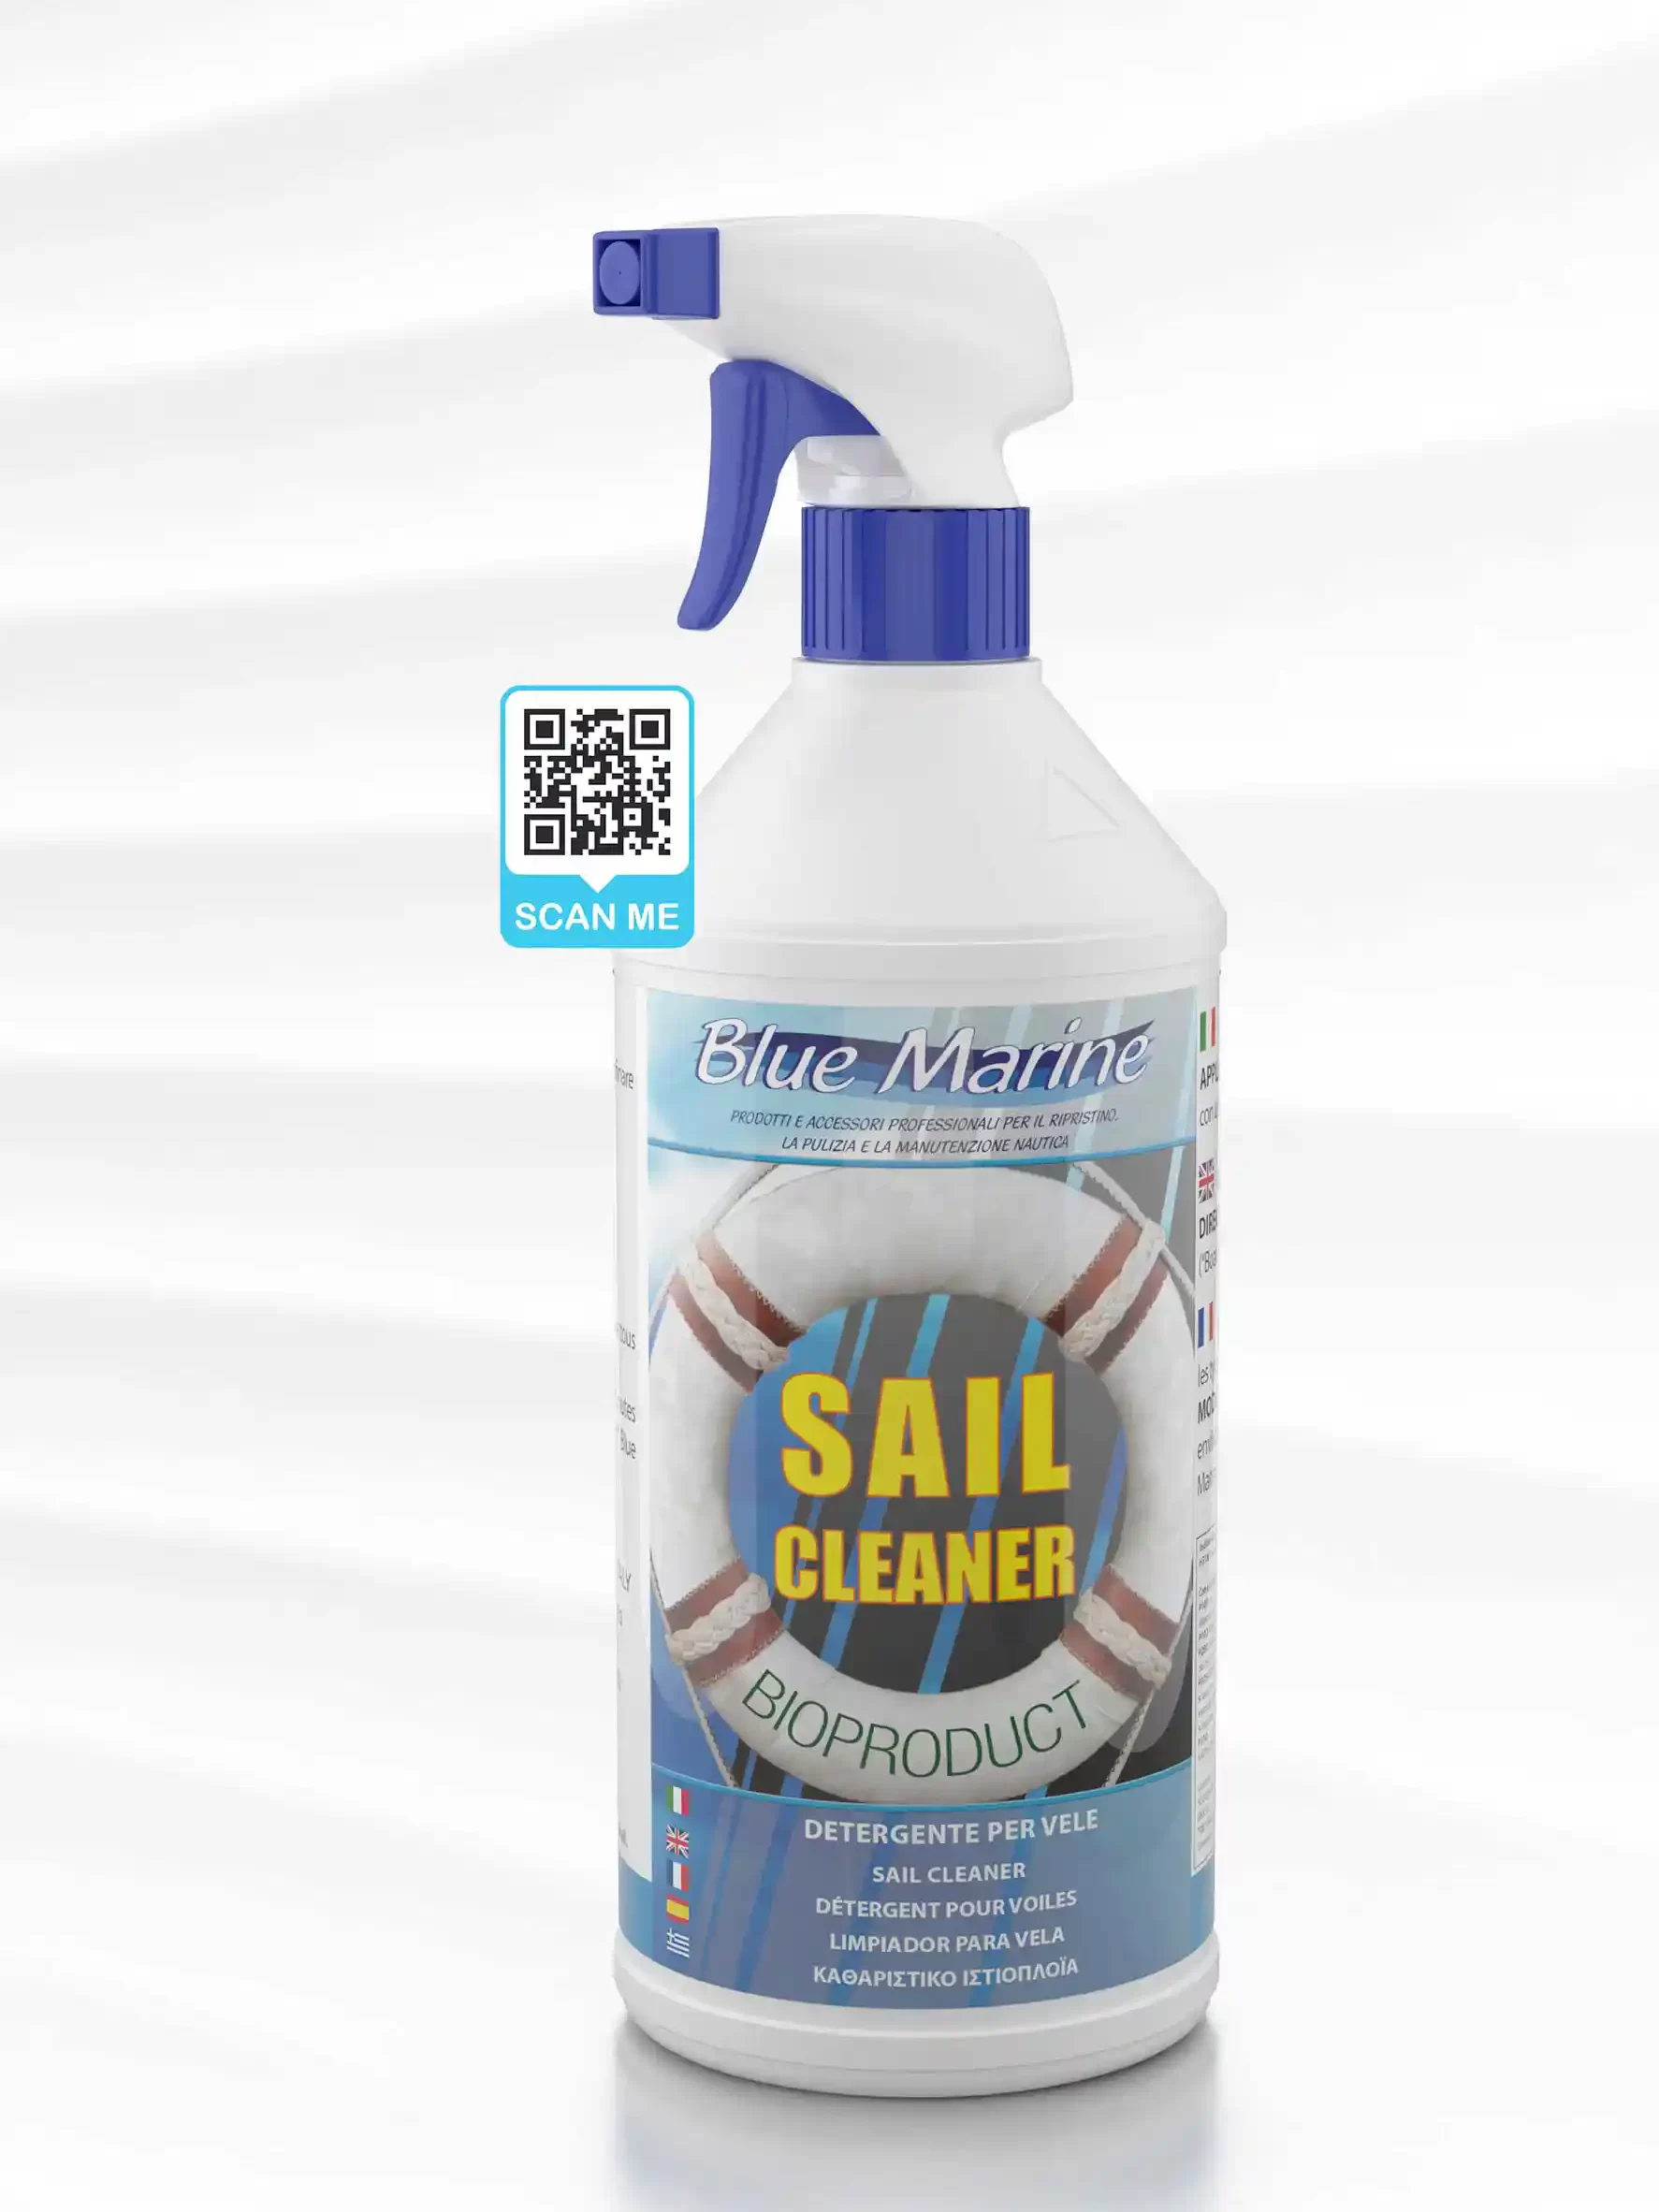 Sail Cleaner